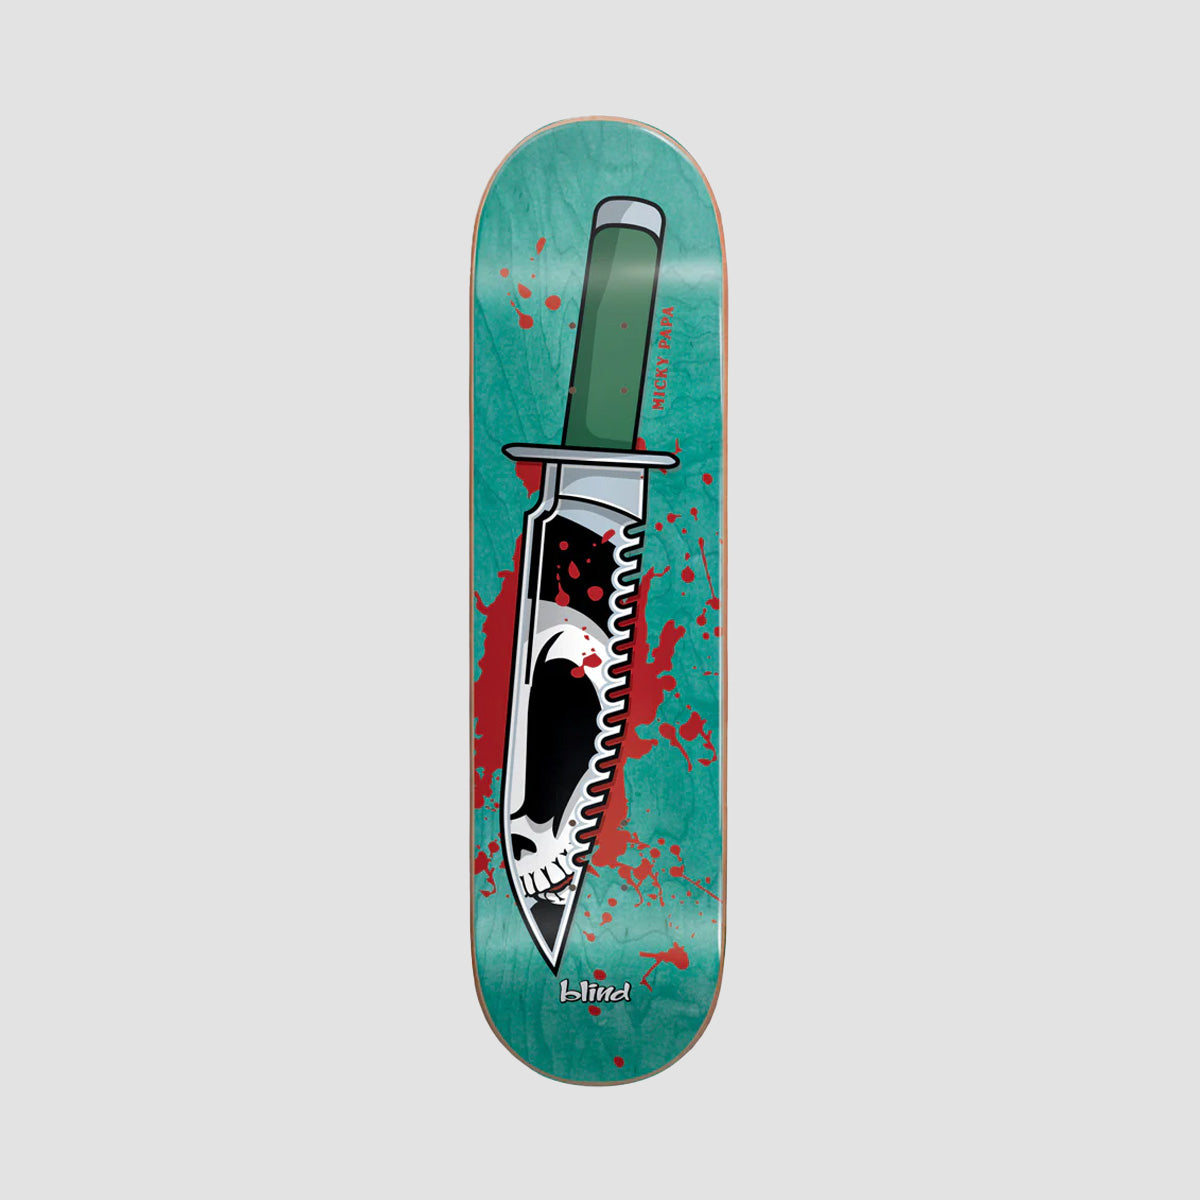 Blind Reaper Knife R7 Skateboard Deck Micky Papa/Teal - 8.375"